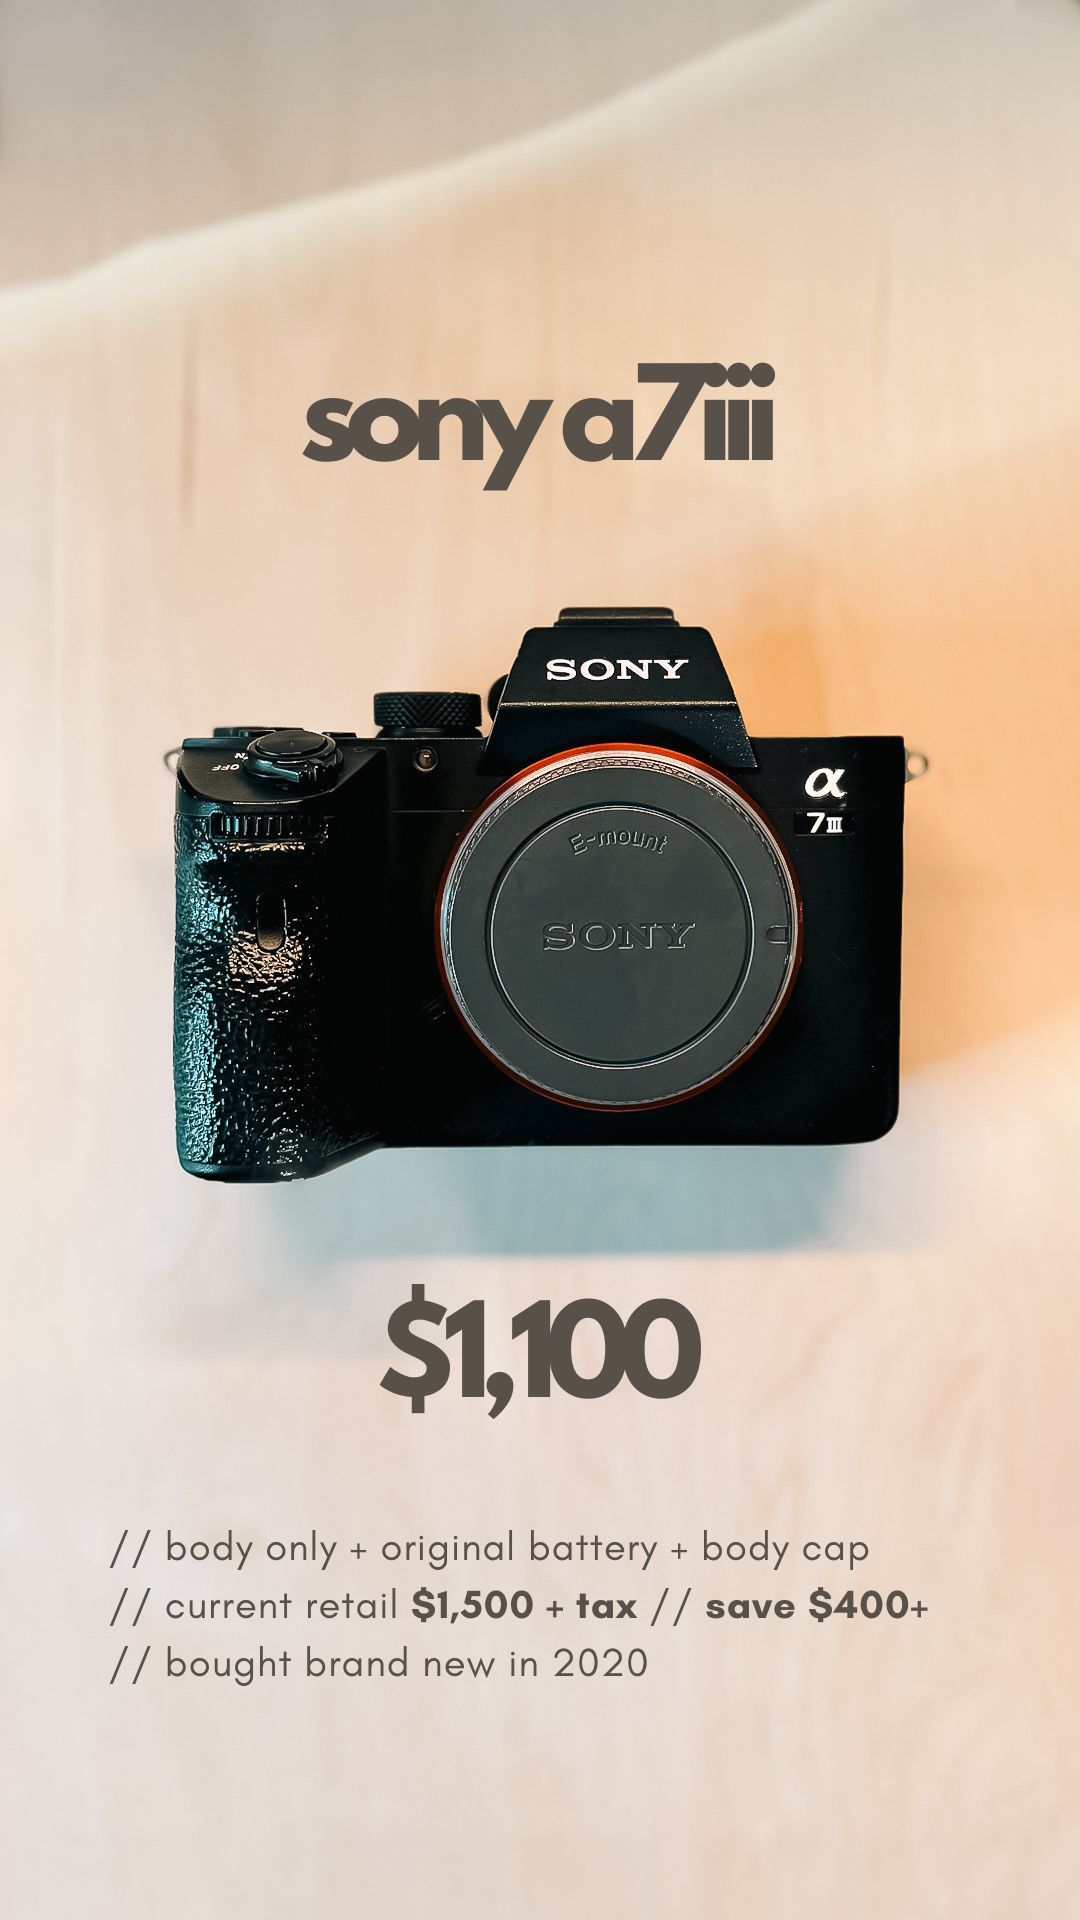 Sony a7iii Camera (Body Only)